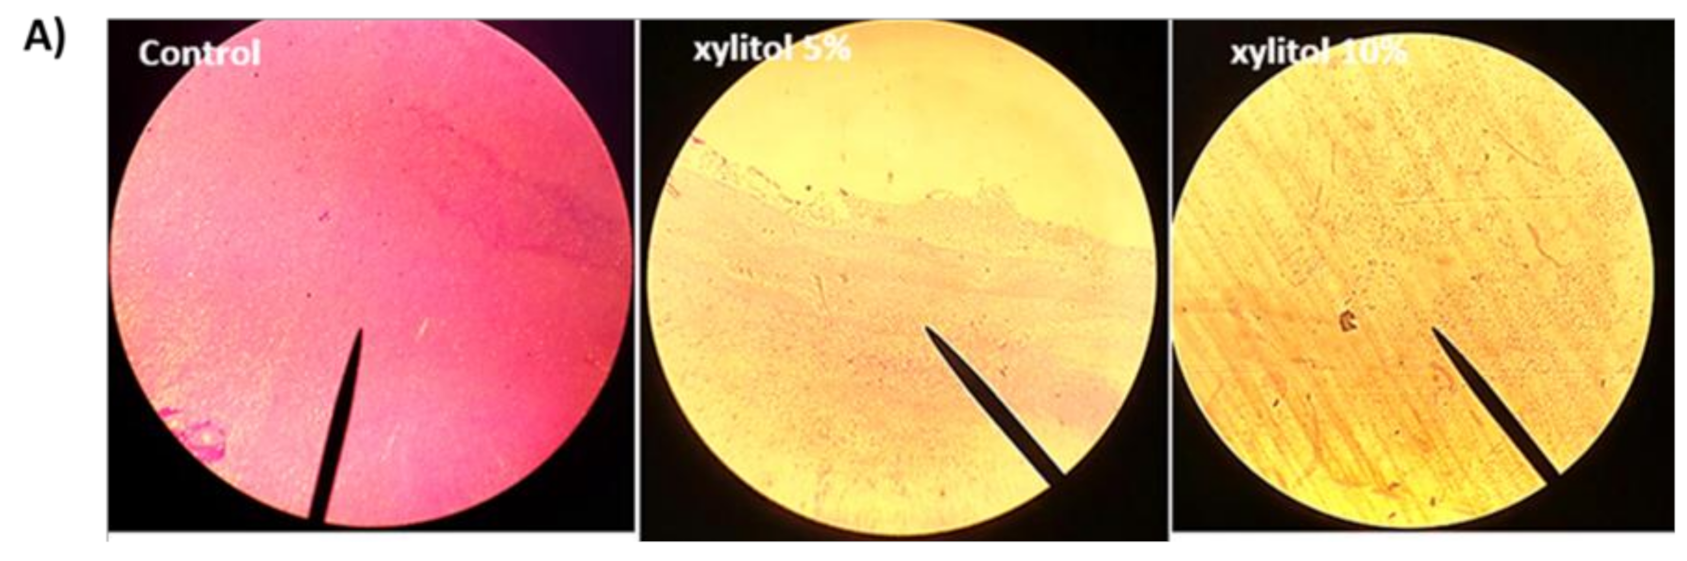 xylitol dysbiosis)